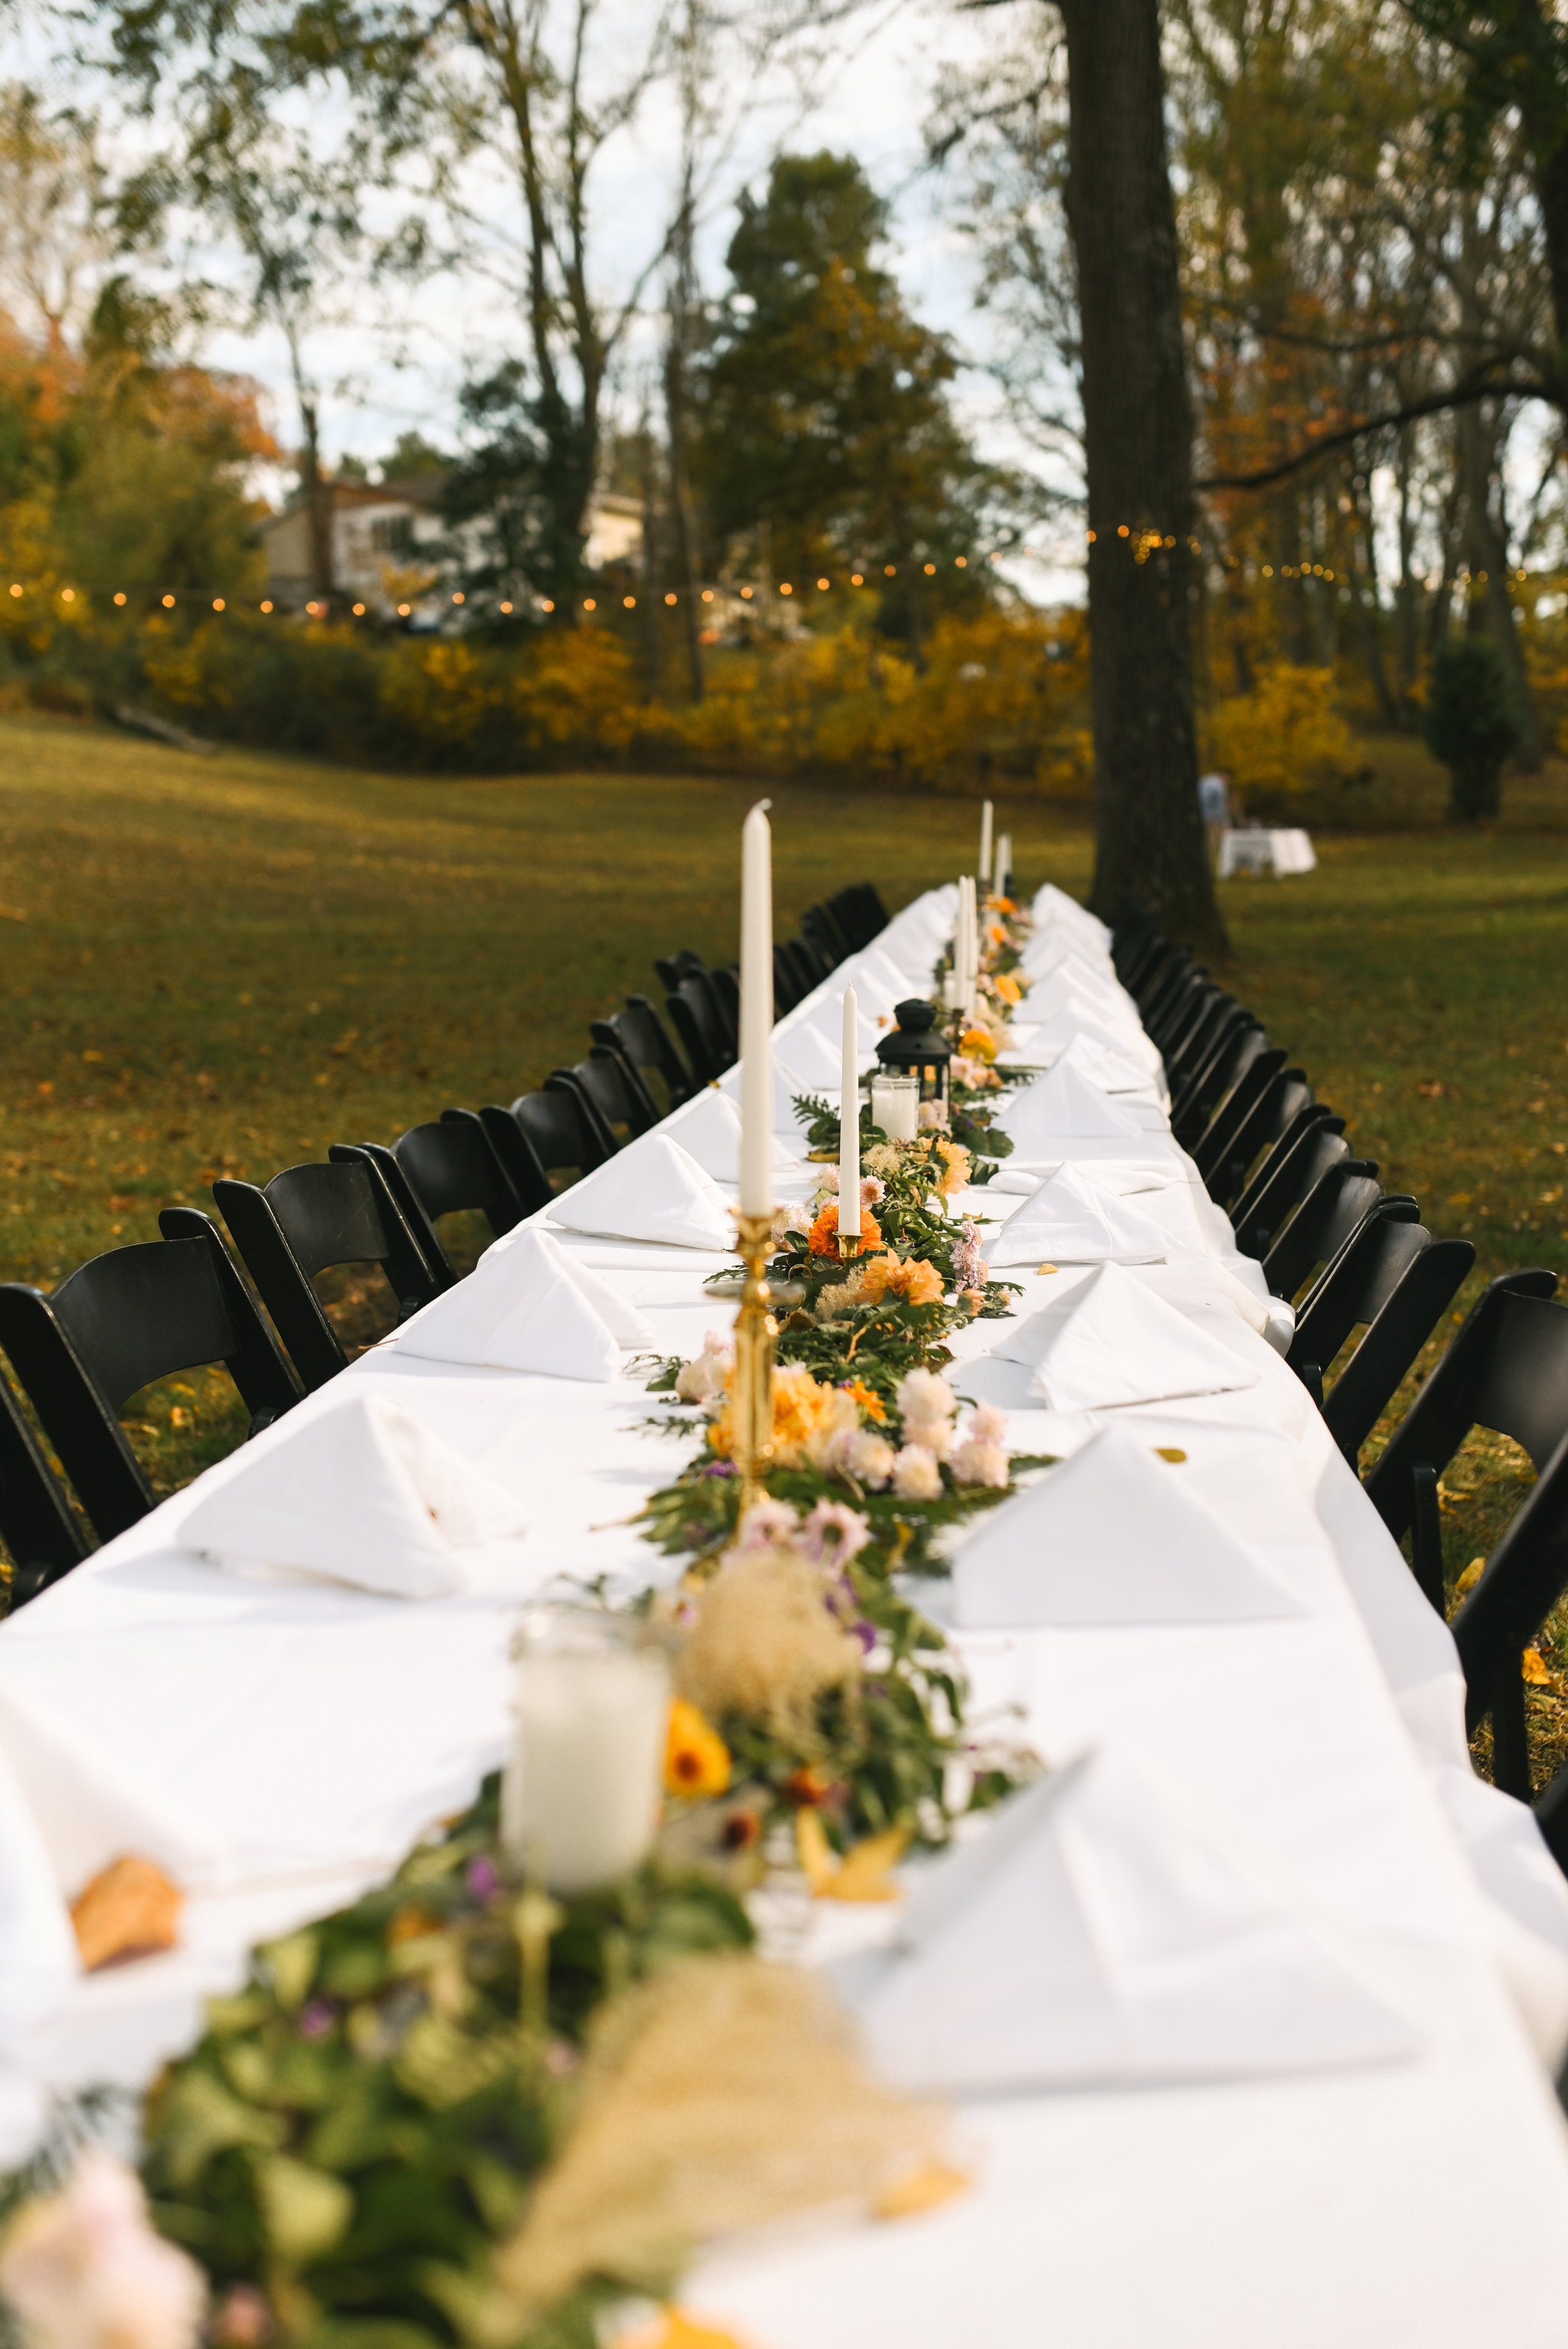  Baltimore, Maryland Wedding Photographer, Backyard Wedding, DIY, Rustic, Casual, Fall Wedding, Woodland, Banquet Table at Reception, Butterbee Farm Floral Centerpieces 